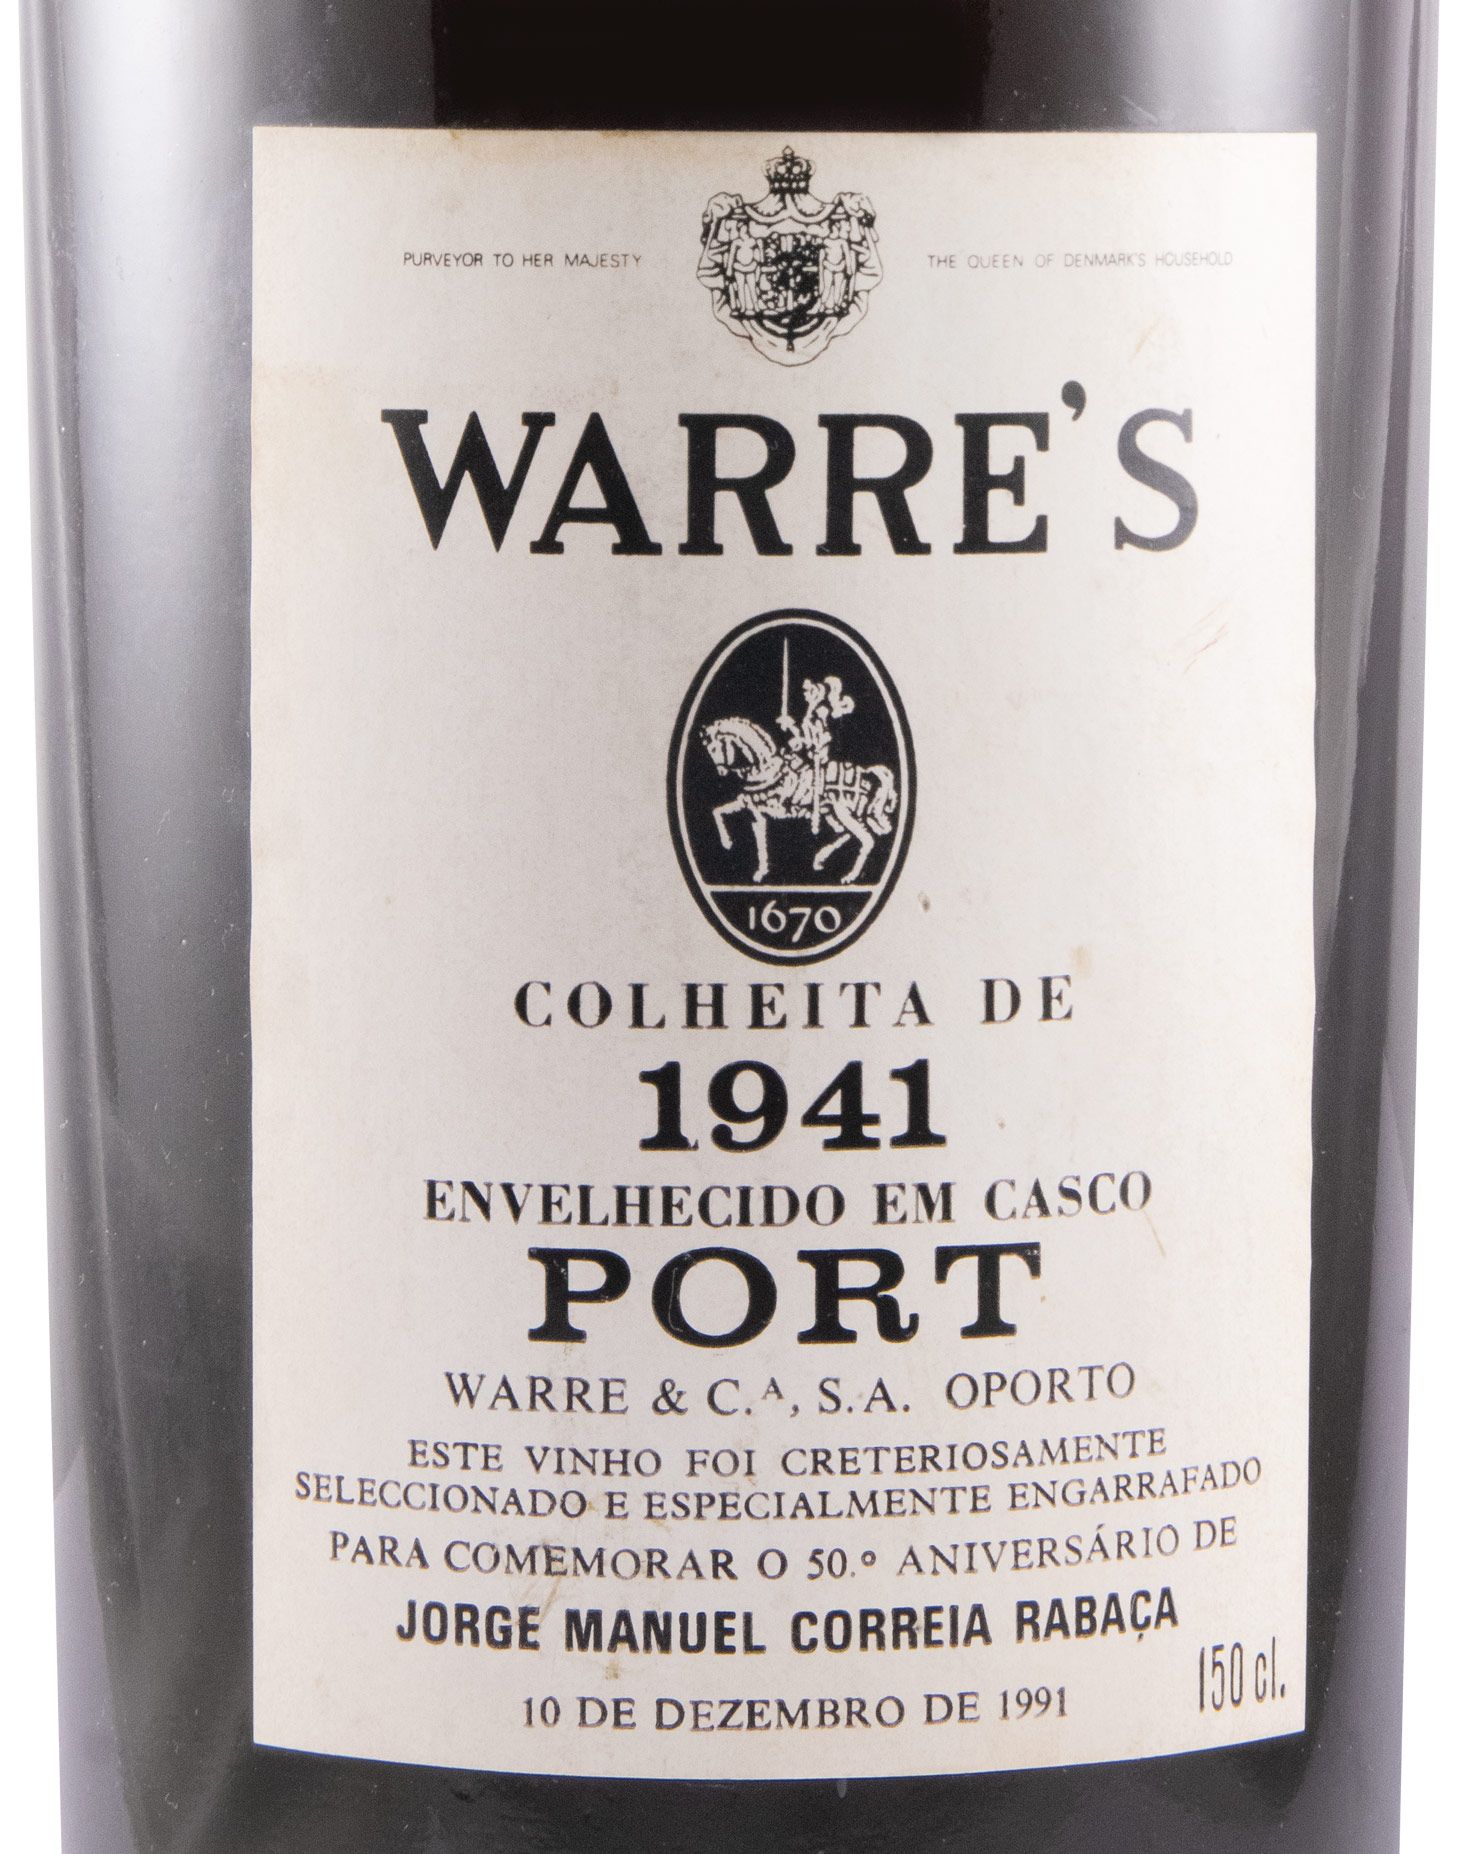 1941 Warre's Colheita 1.5L